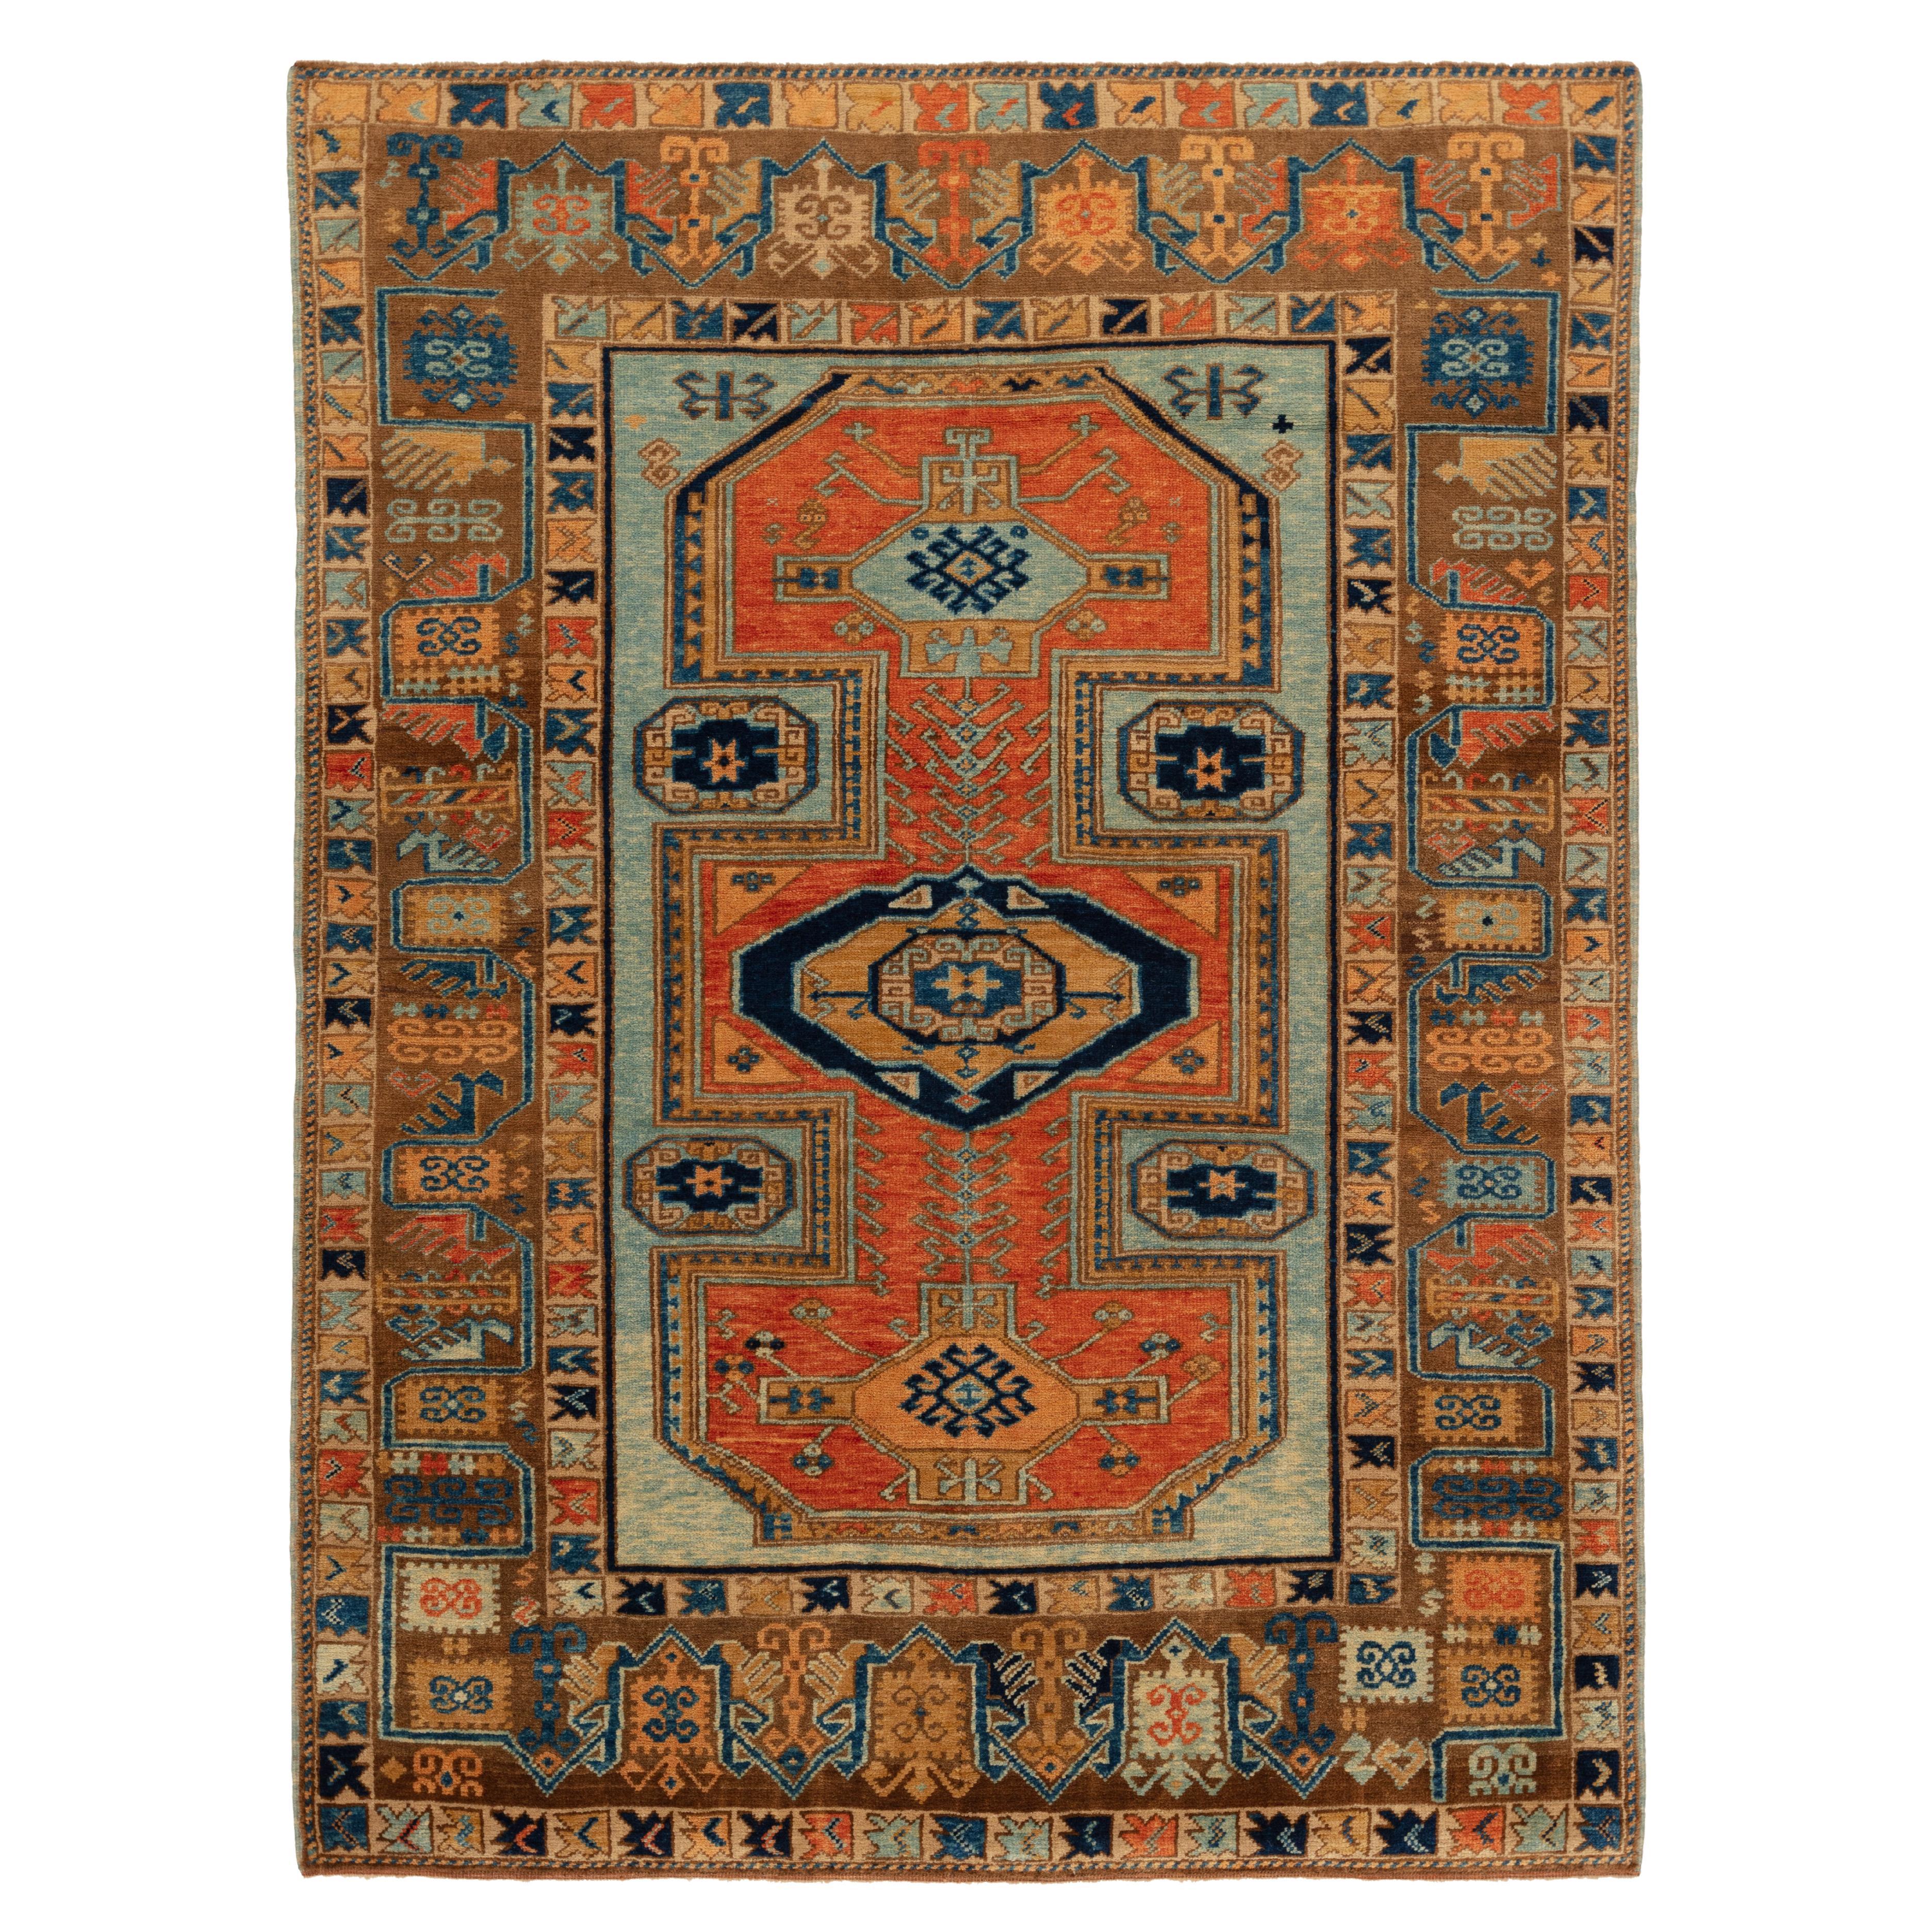 Ararat Rugs Village Rug, Antique Anatolian Turkish Revival Carpet Natural Dyed For Sale